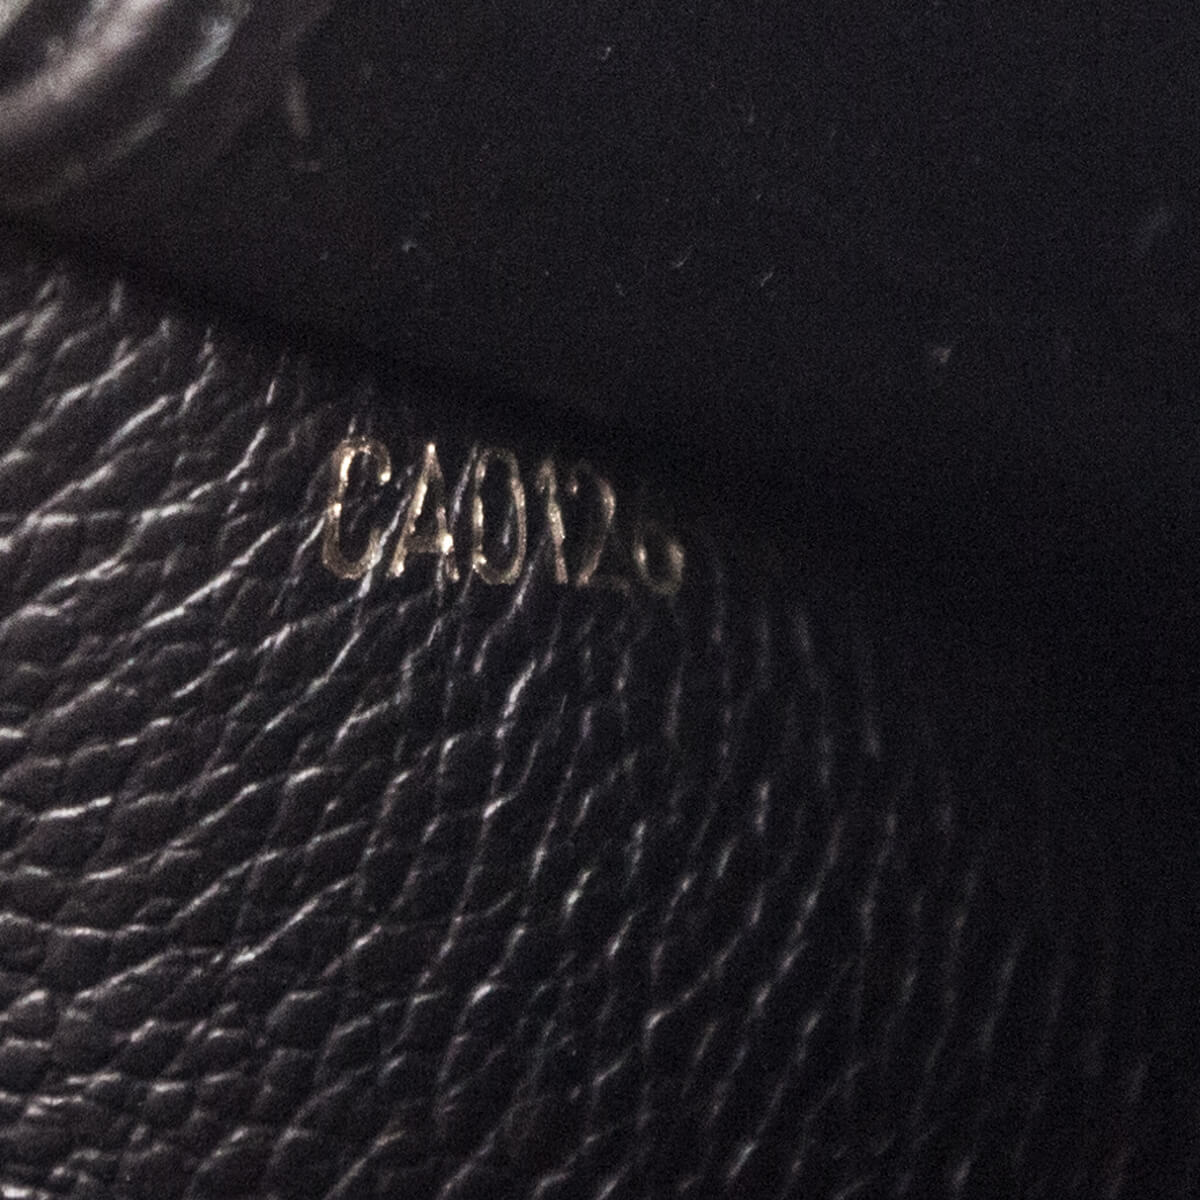 Cloth wallet Louis Vuitton Black in Cloth - 25902087